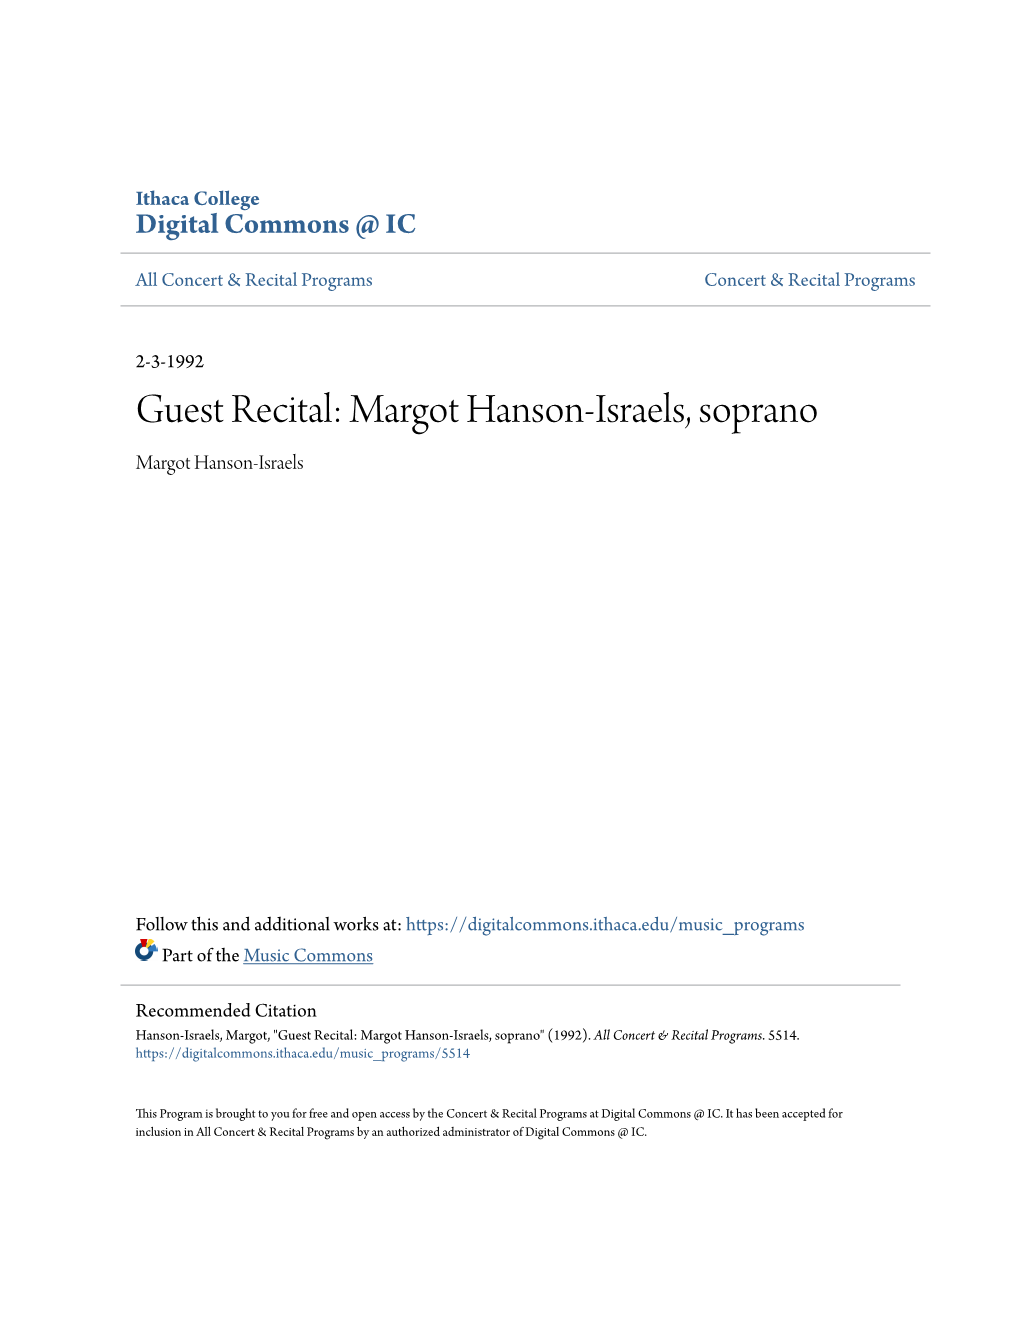 Margot Hanson-Israels, Soprano Margot Hanson-Israels